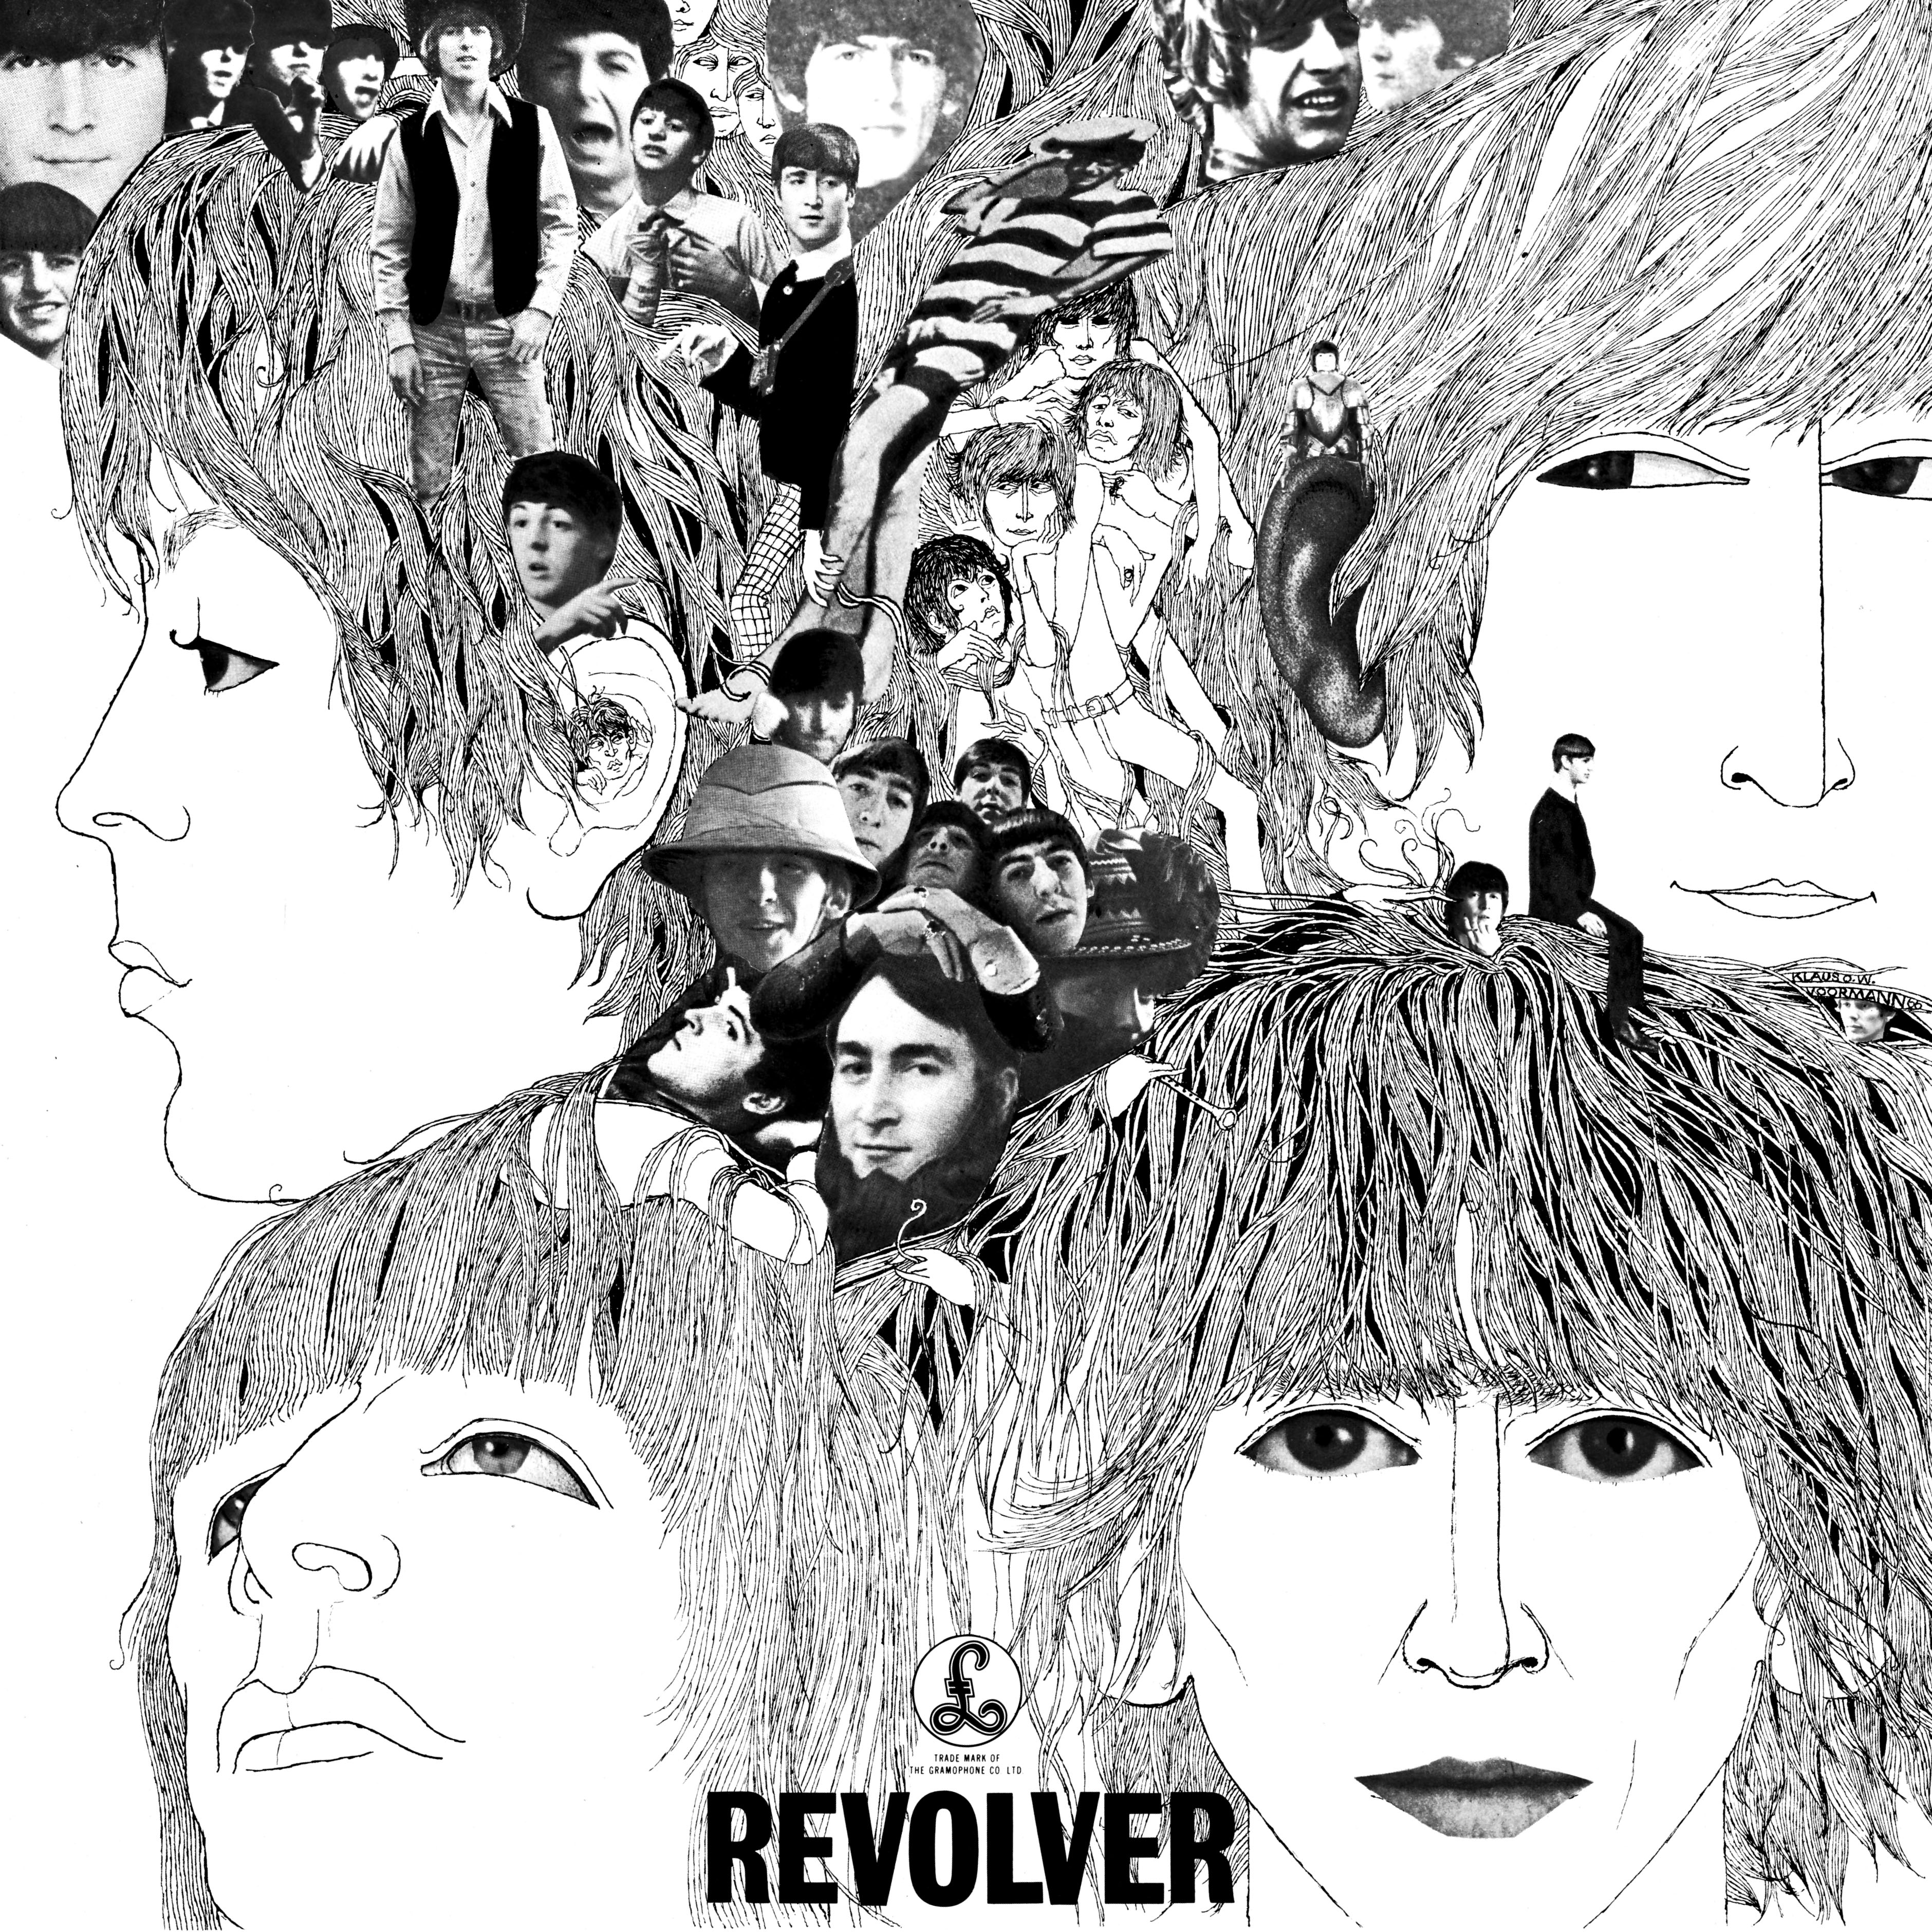 Revolver album cover